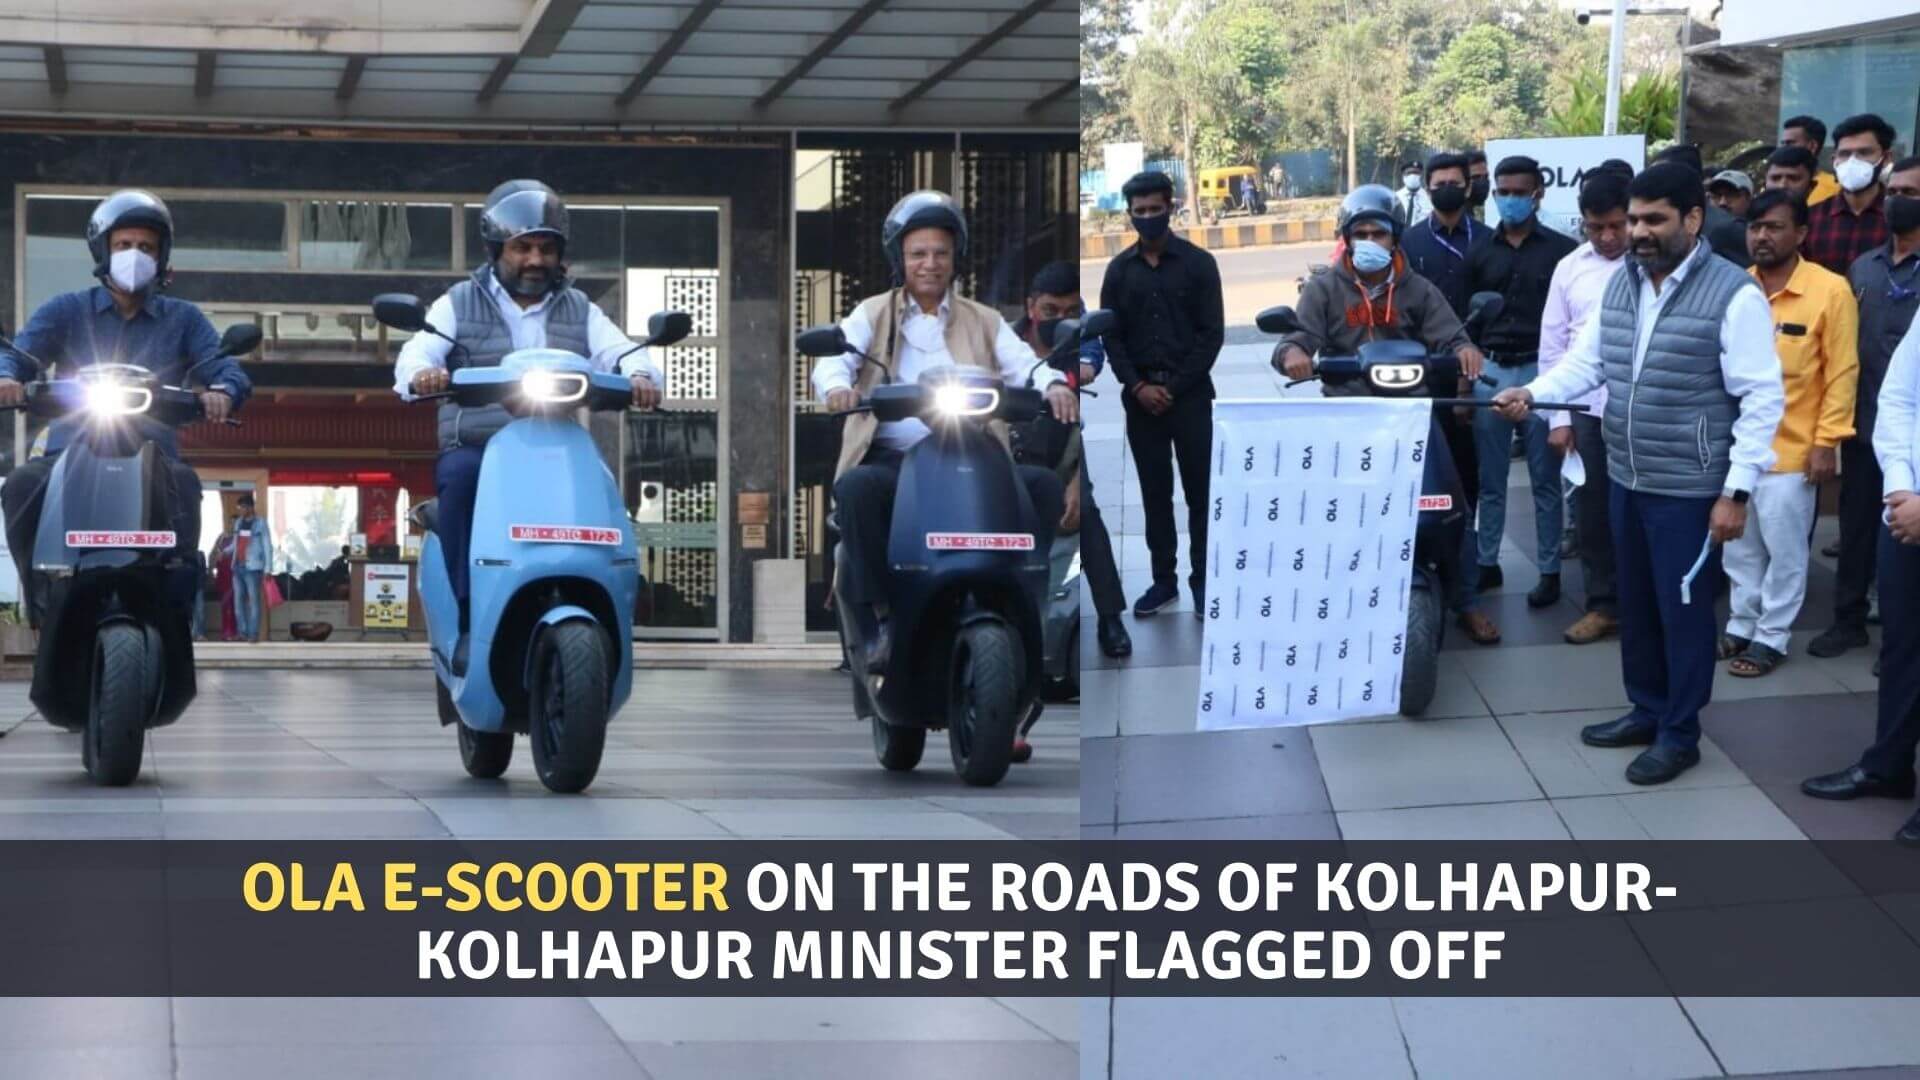 https://e-vehicleinfo.com/ola-e-scooter-on-the-roads-of-kolhapur-kolhapur-minister-flagged-off/